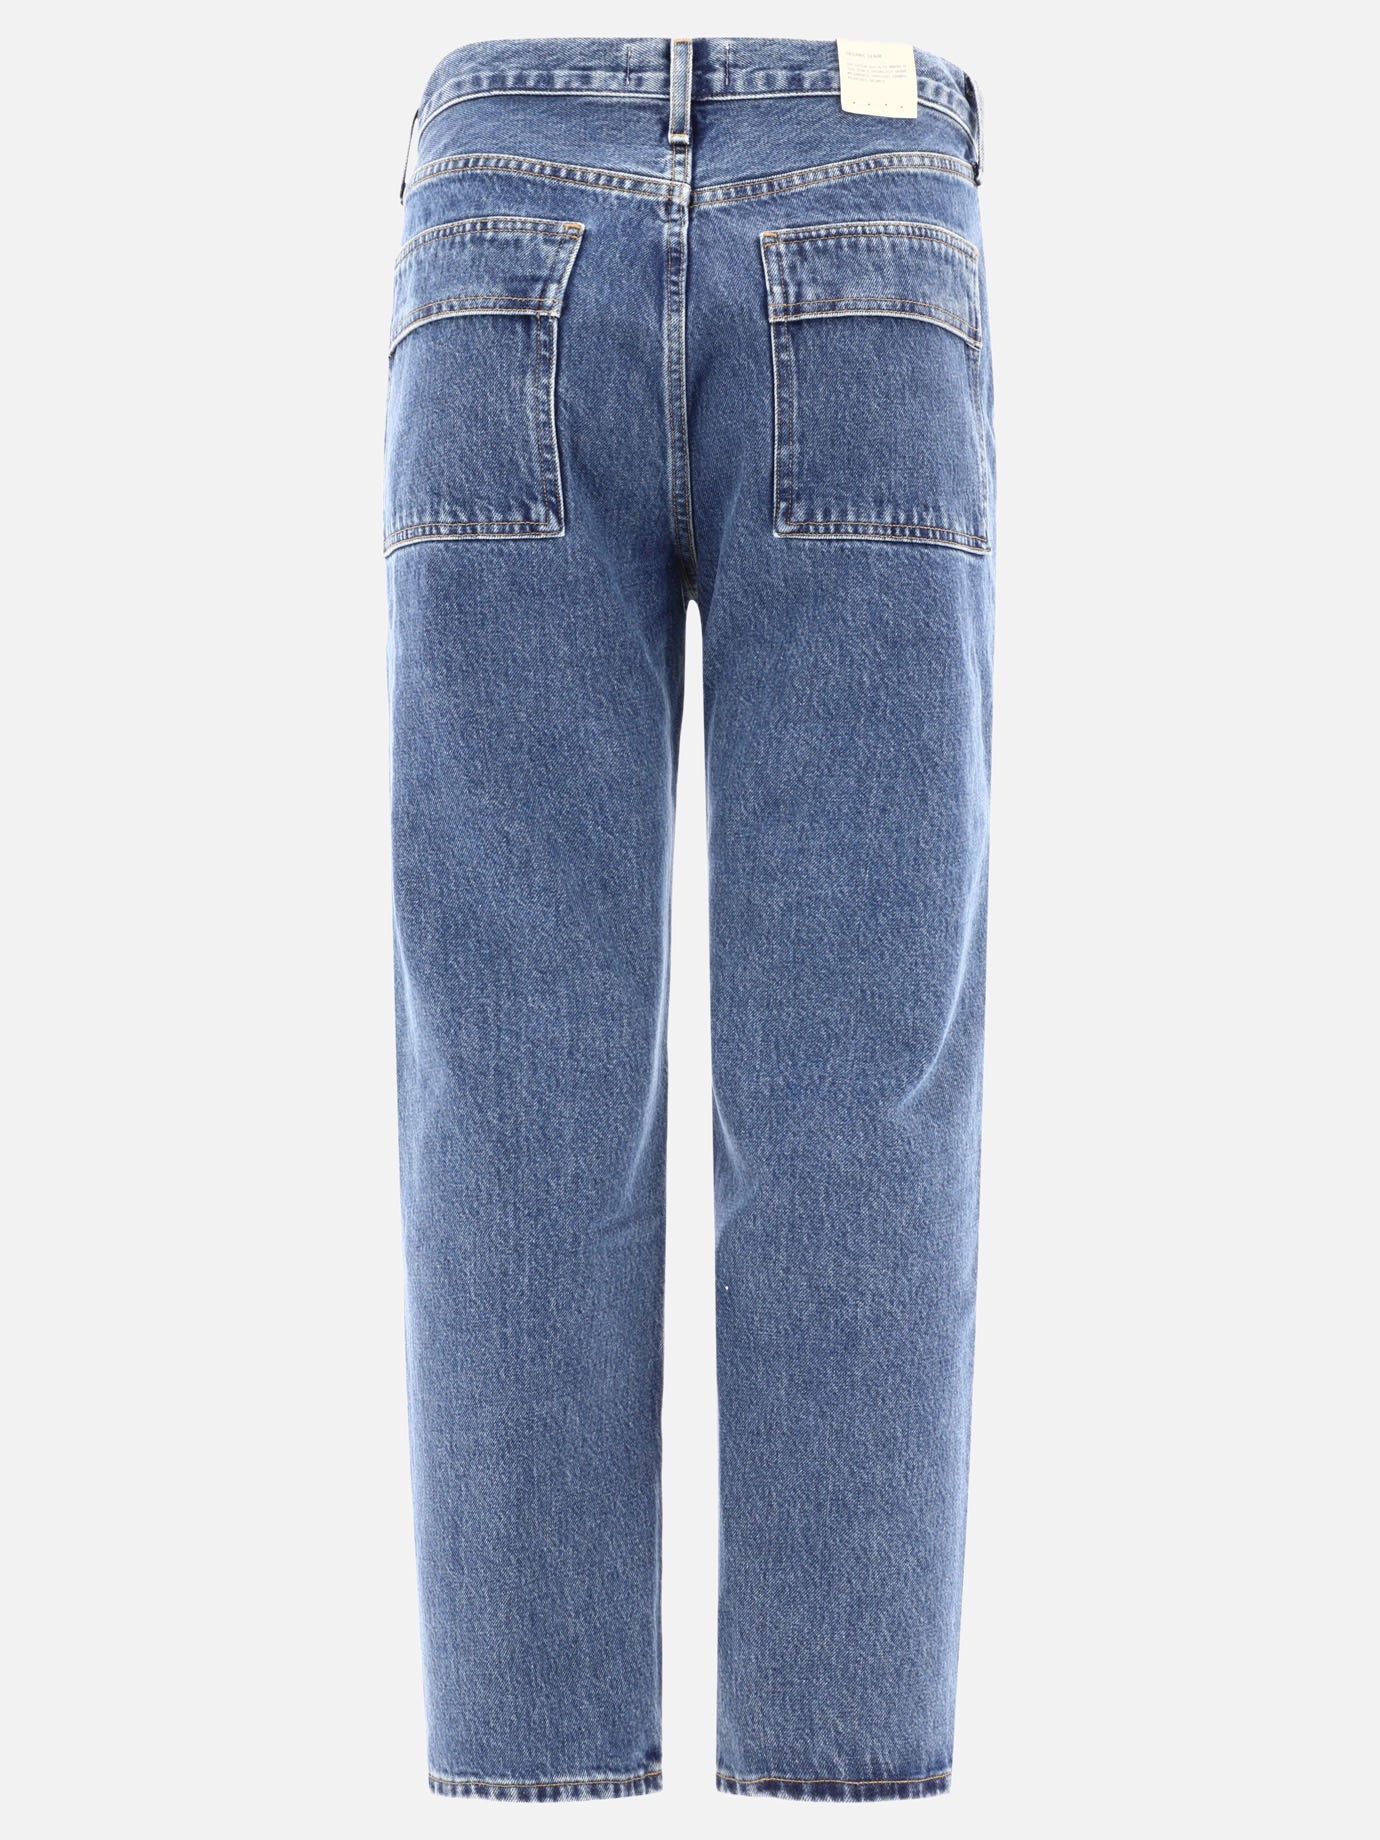 "Cooper" cargo jeans